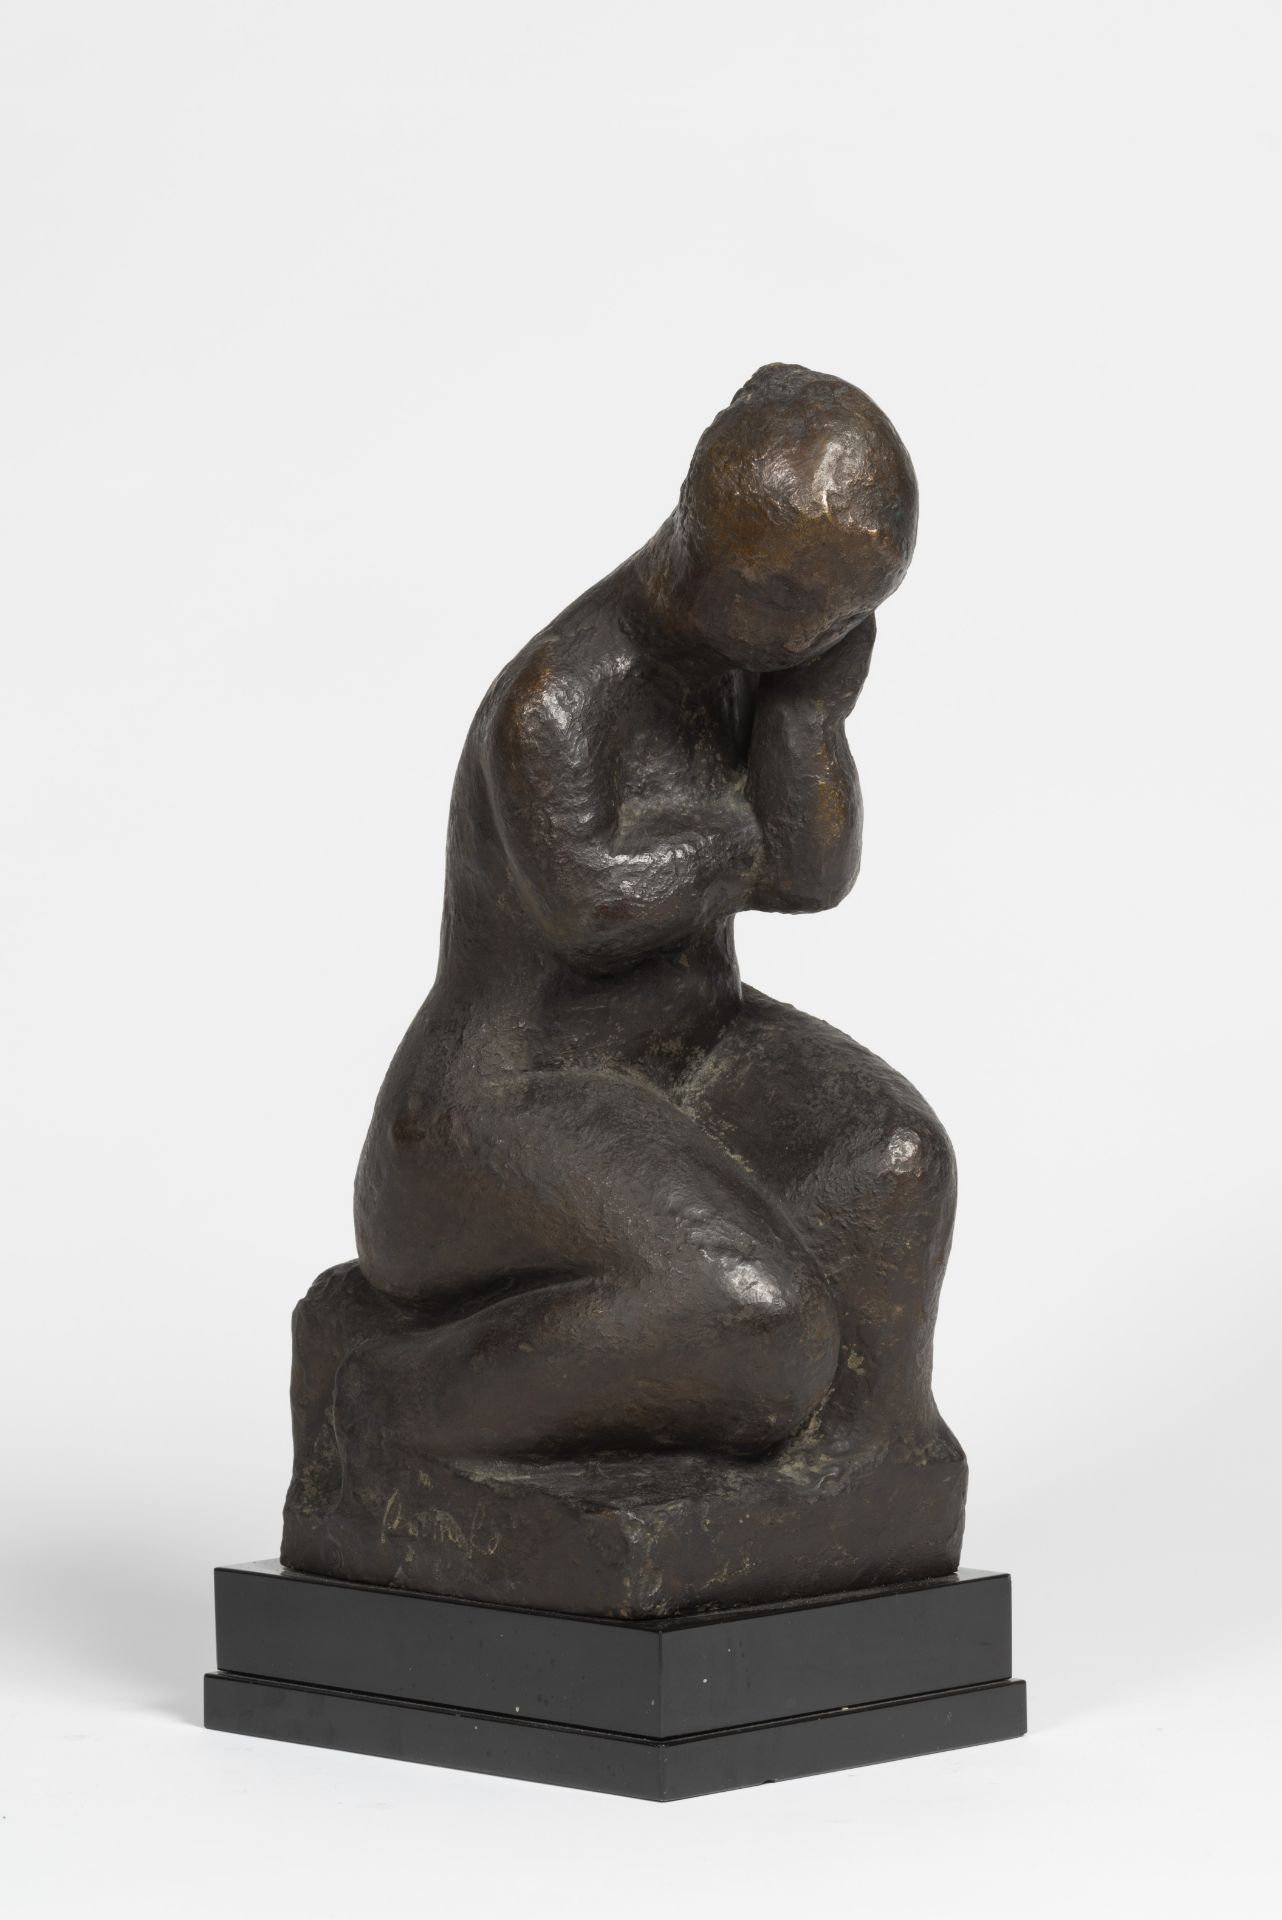 CONSTANT PERMEKE (1886-1952) Femme pensive